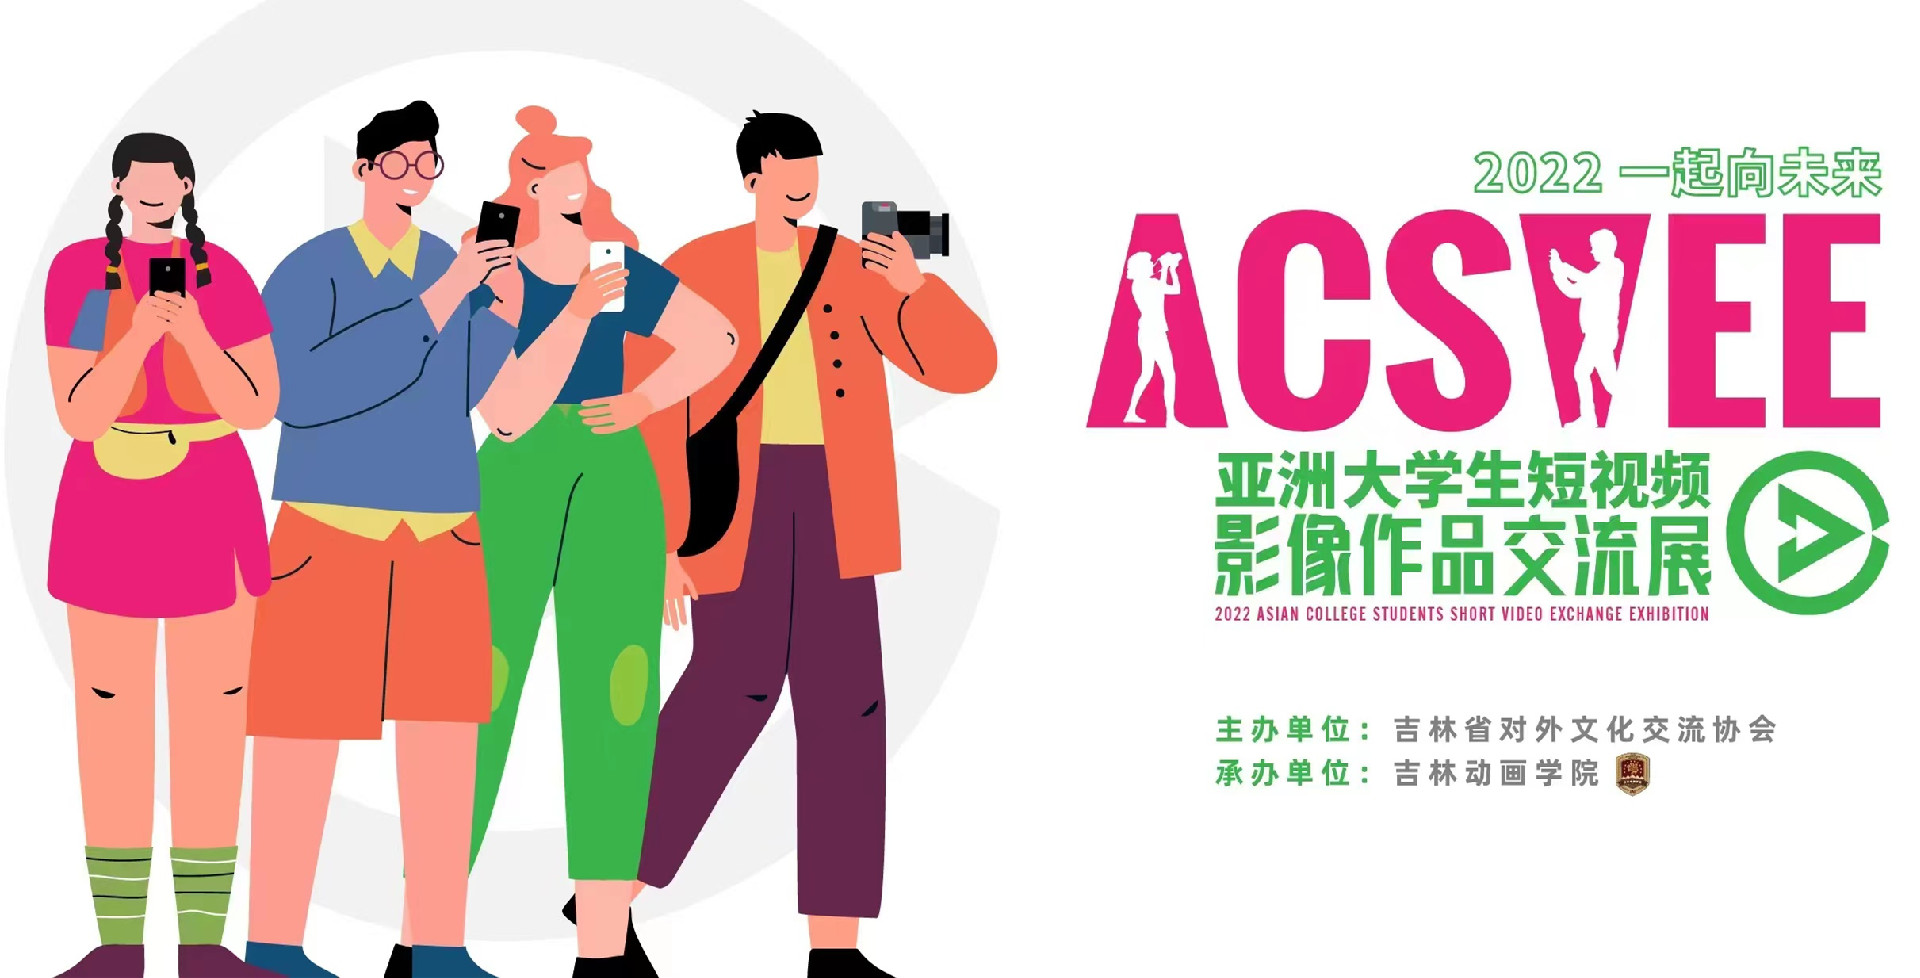 2022 Asian College Students Short Video Exchange Exhibition